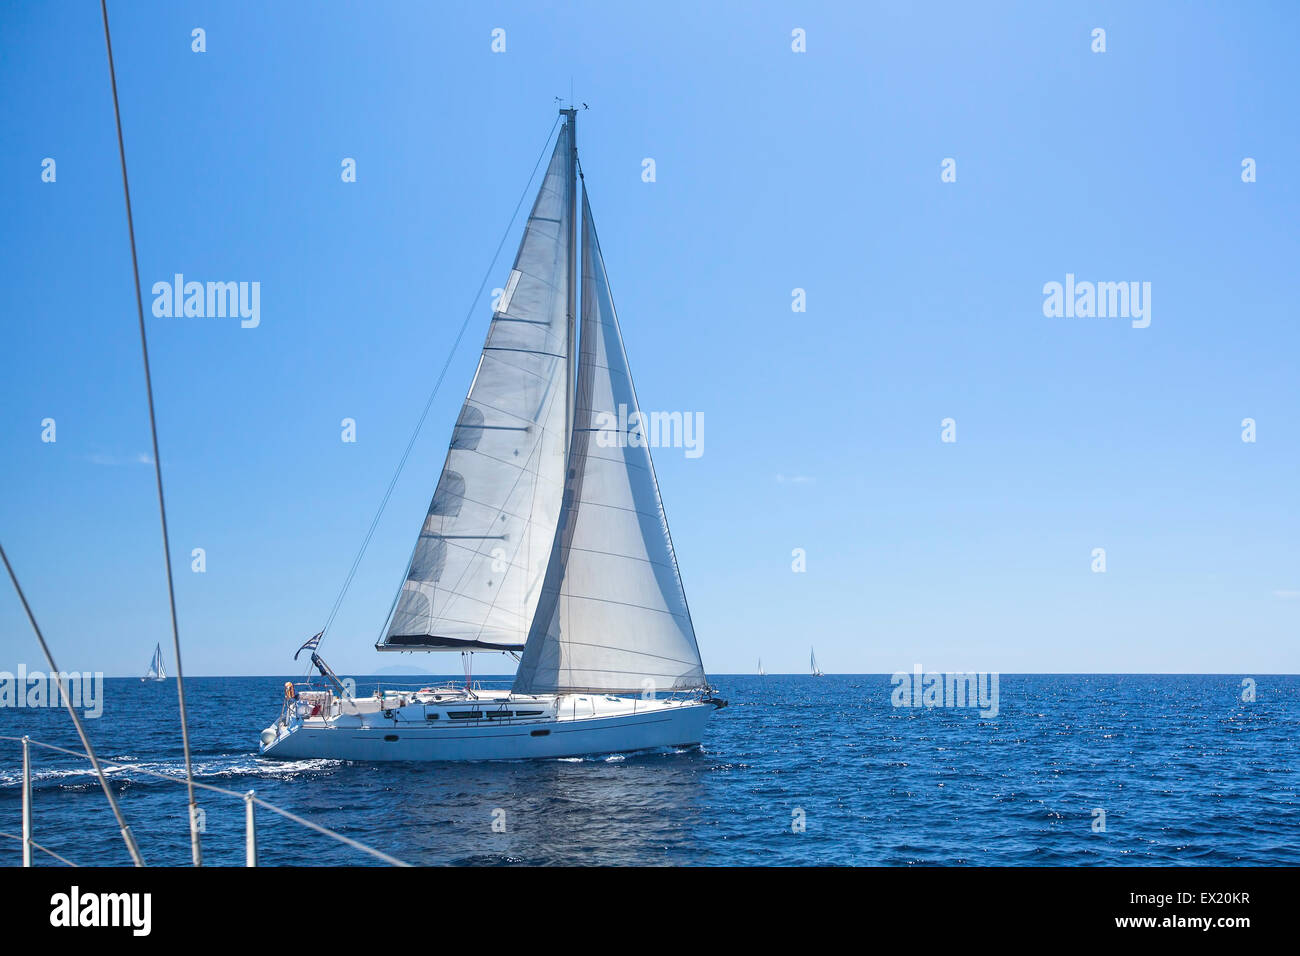 Equipo océano fotografías e imágenes de alta resolución - Alamy